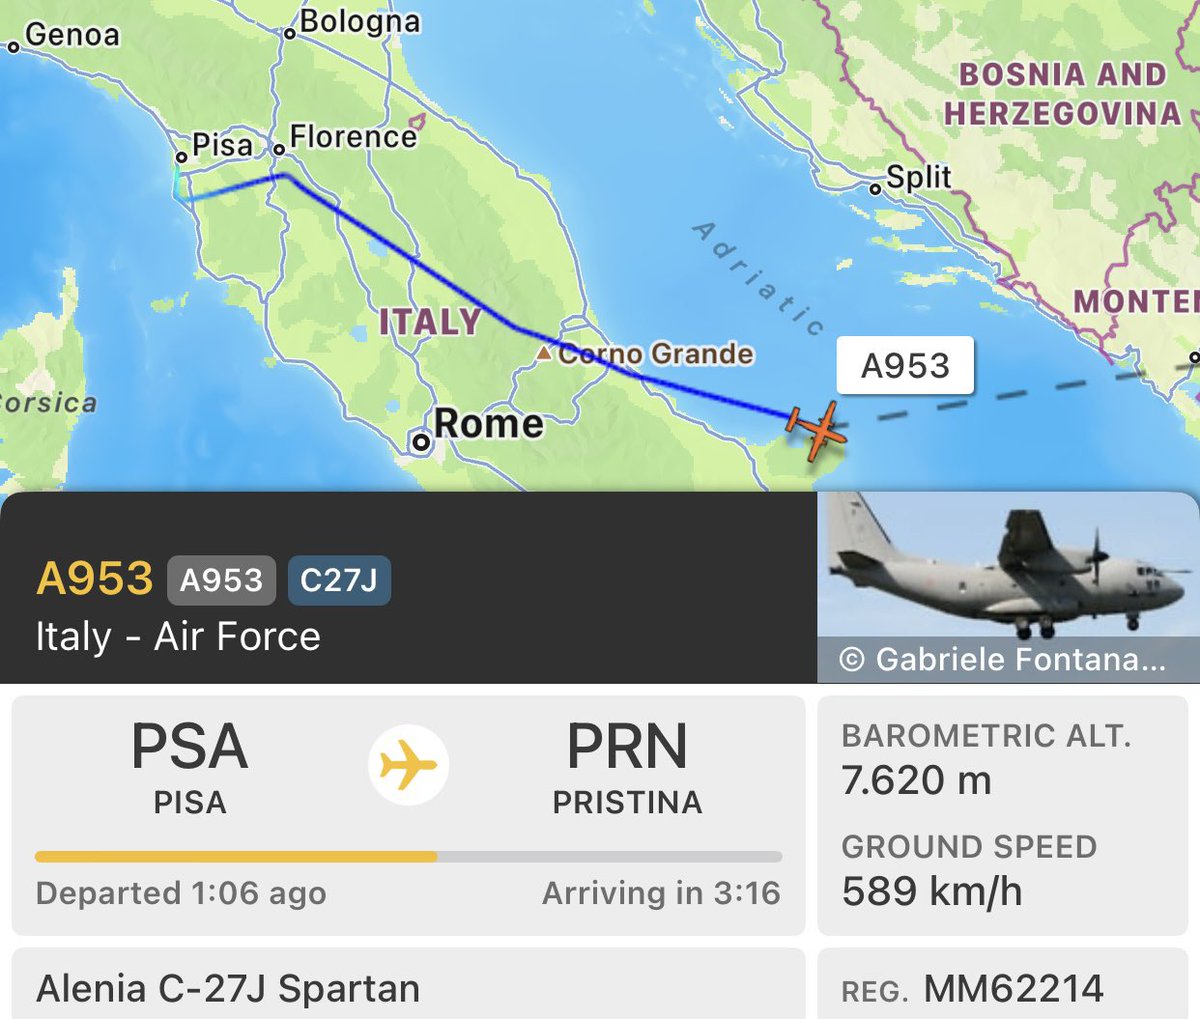 A953 - MM62214 - 33FFBF

Italian C-27J Spartan en route to Pristina, Kosovo.